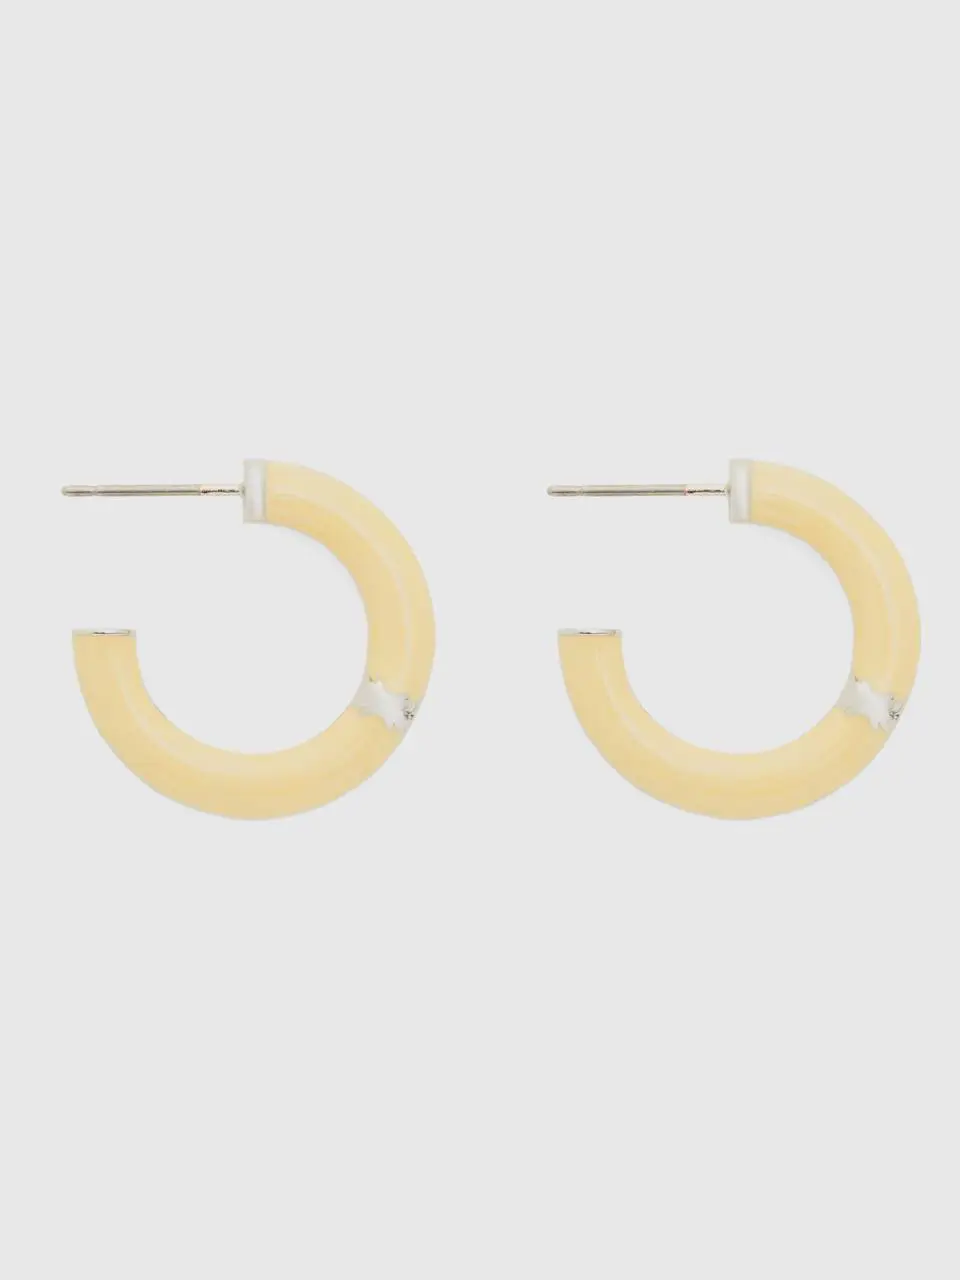 Benetton light yellow c hoop earrings. 1